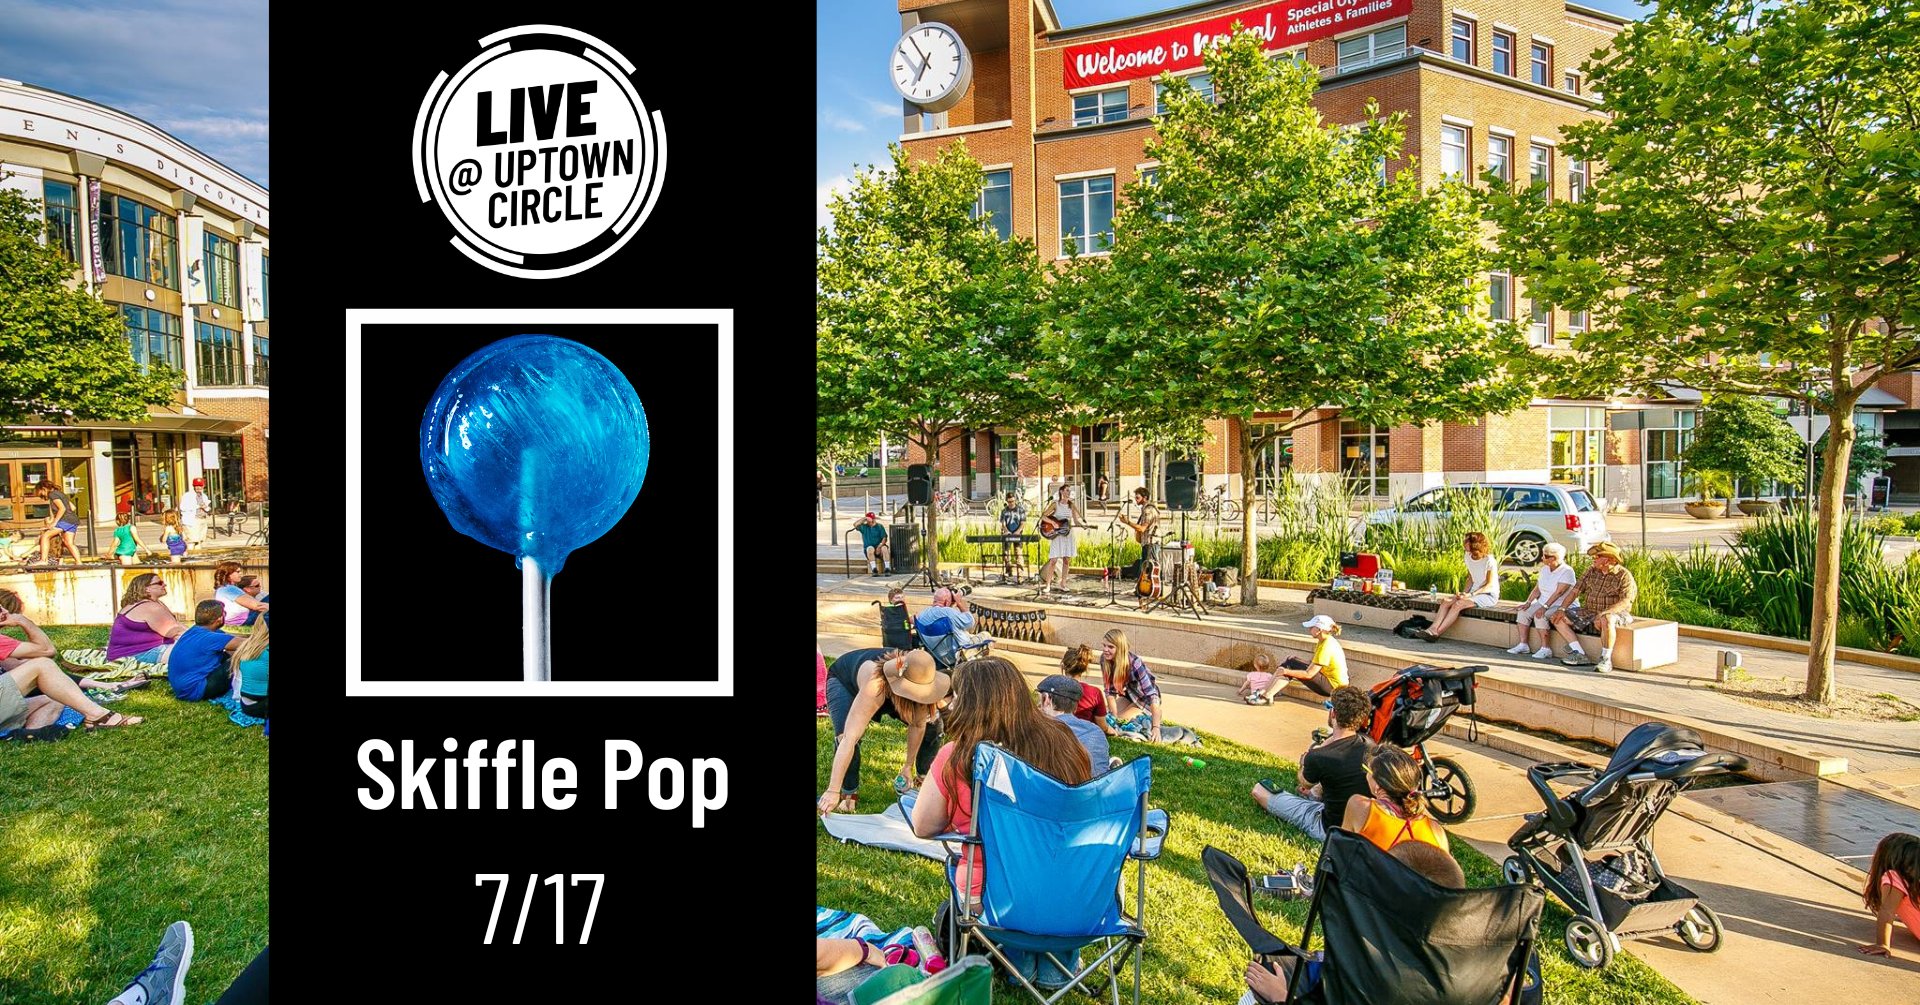 Normal LIVE presents Skiffle Pop @ Uptown Circle